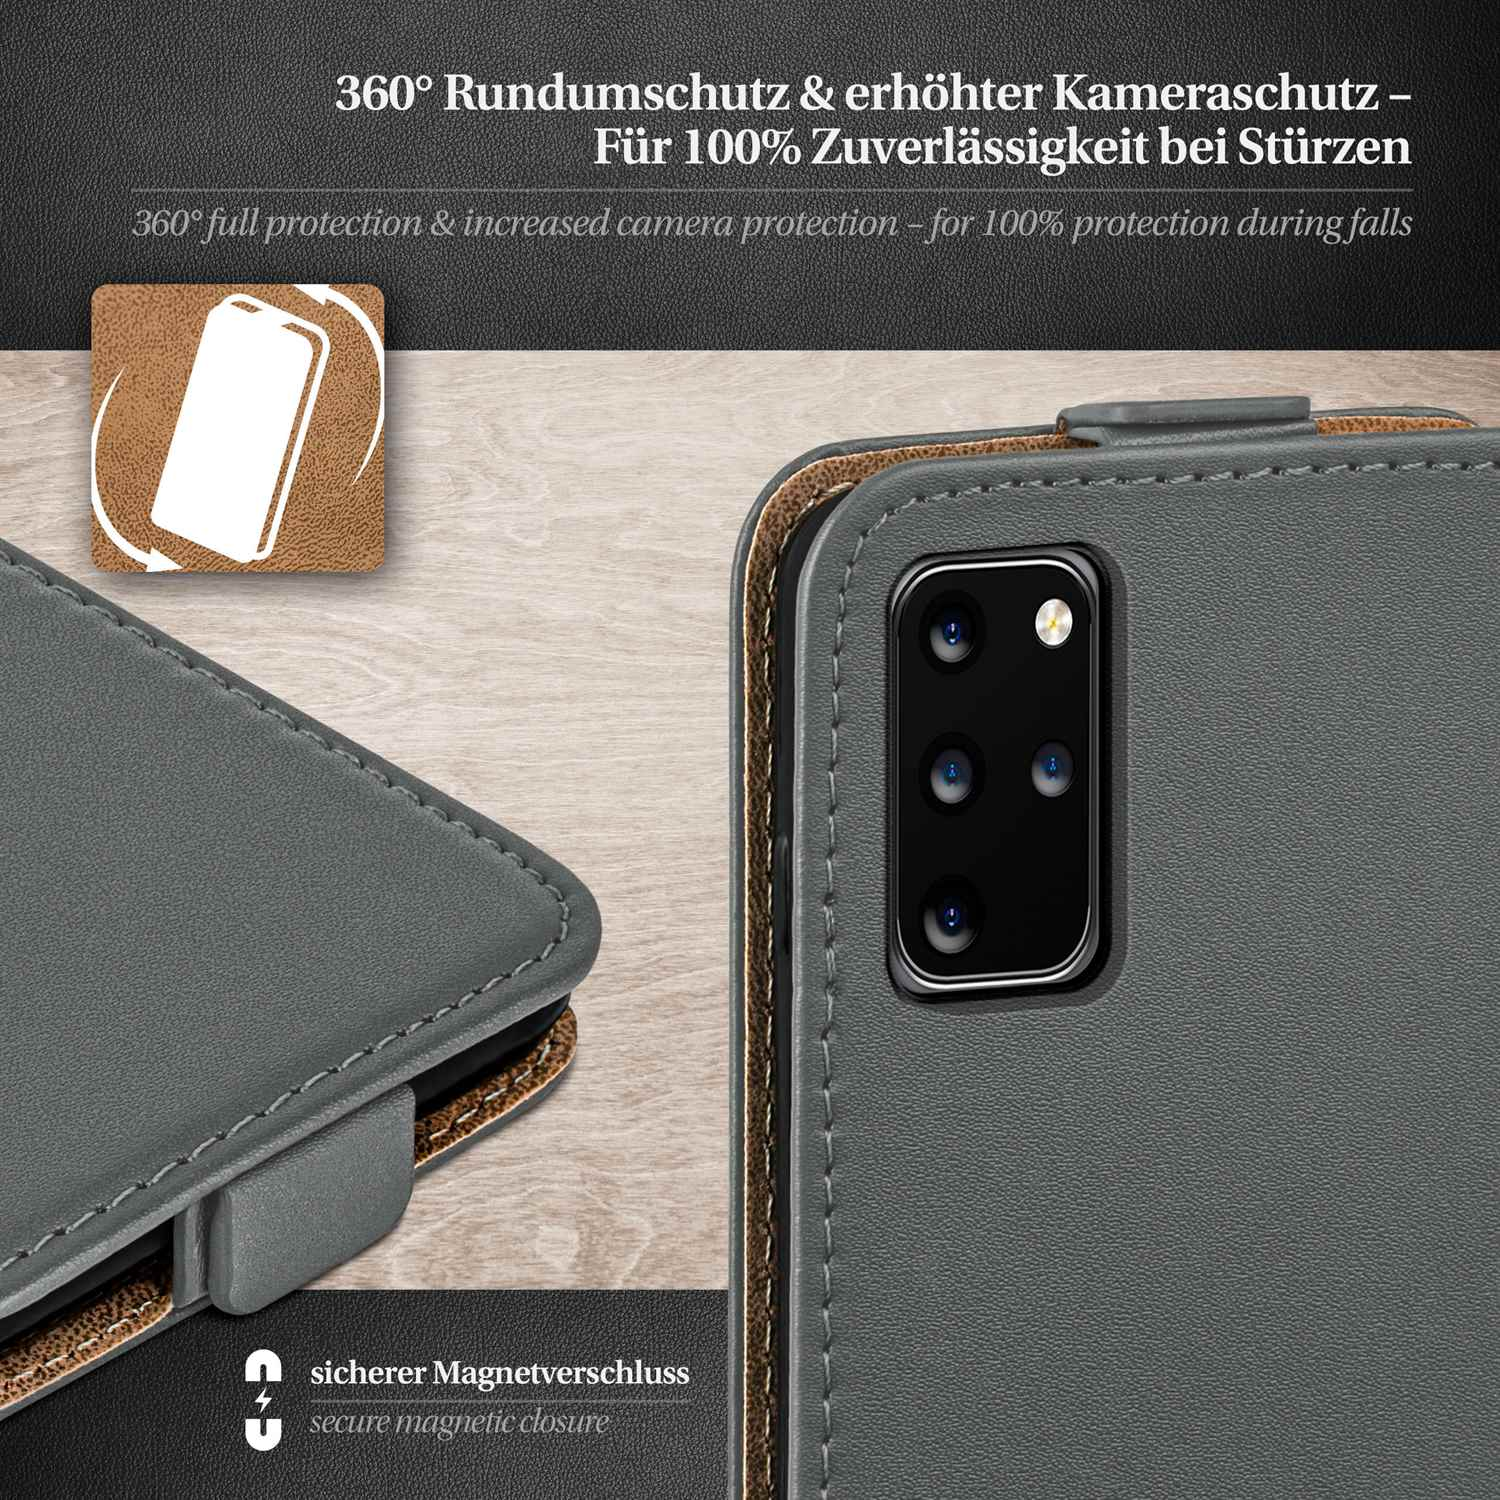 Samsung, 5G, Plus S20 Case, Flip Anthracite-Gray Cover, Flip Galaxy MOEX